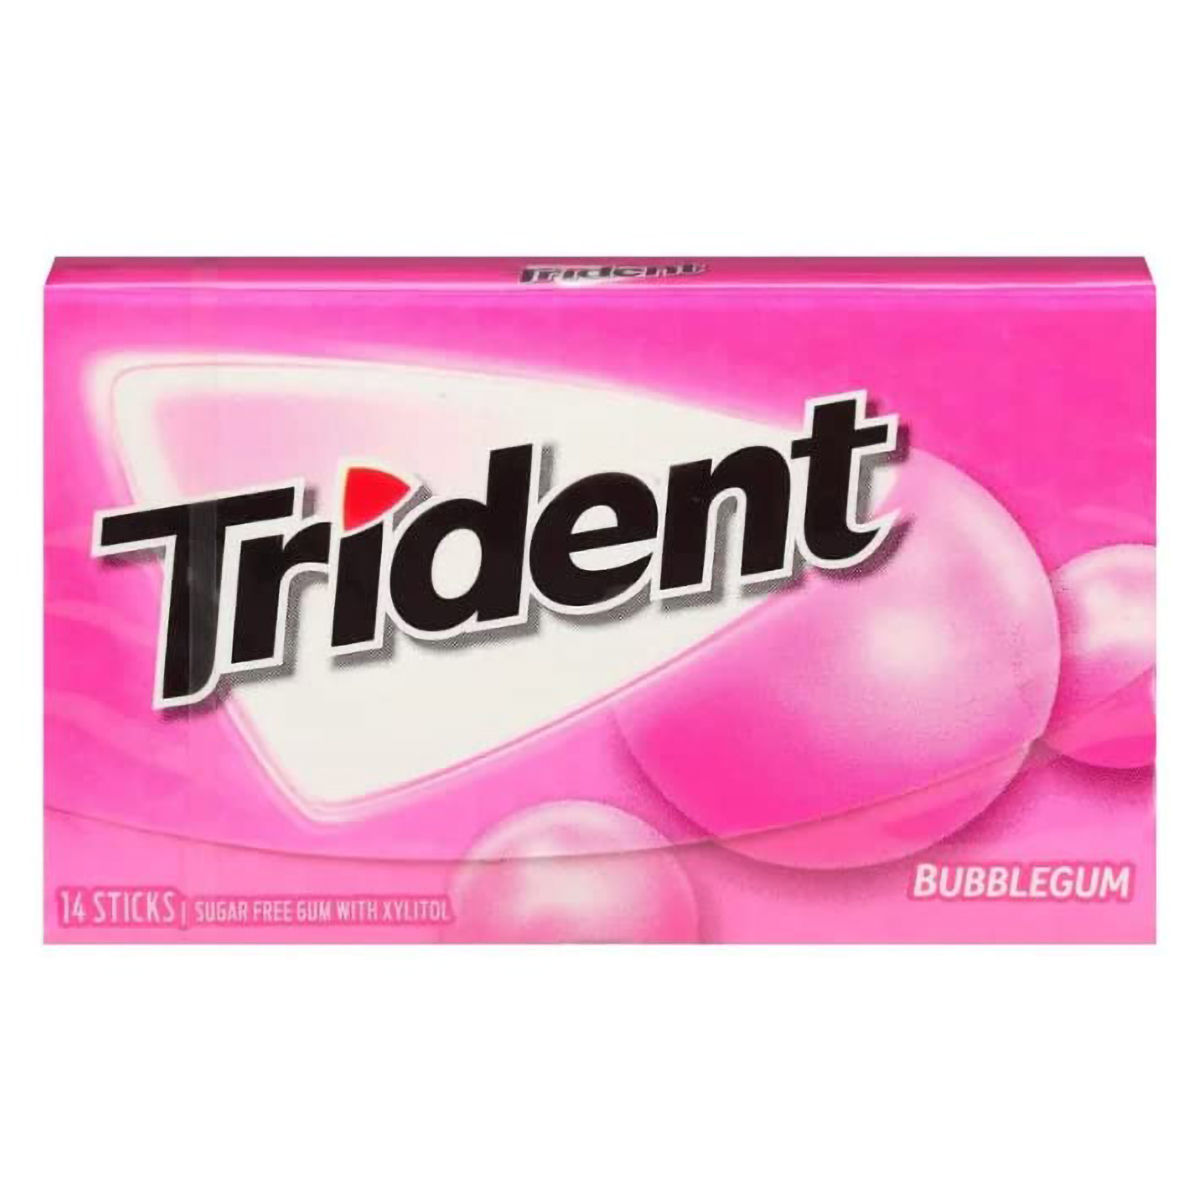 Buy Trident Sugarfree Gum Bubblemint, 14 Stick Online